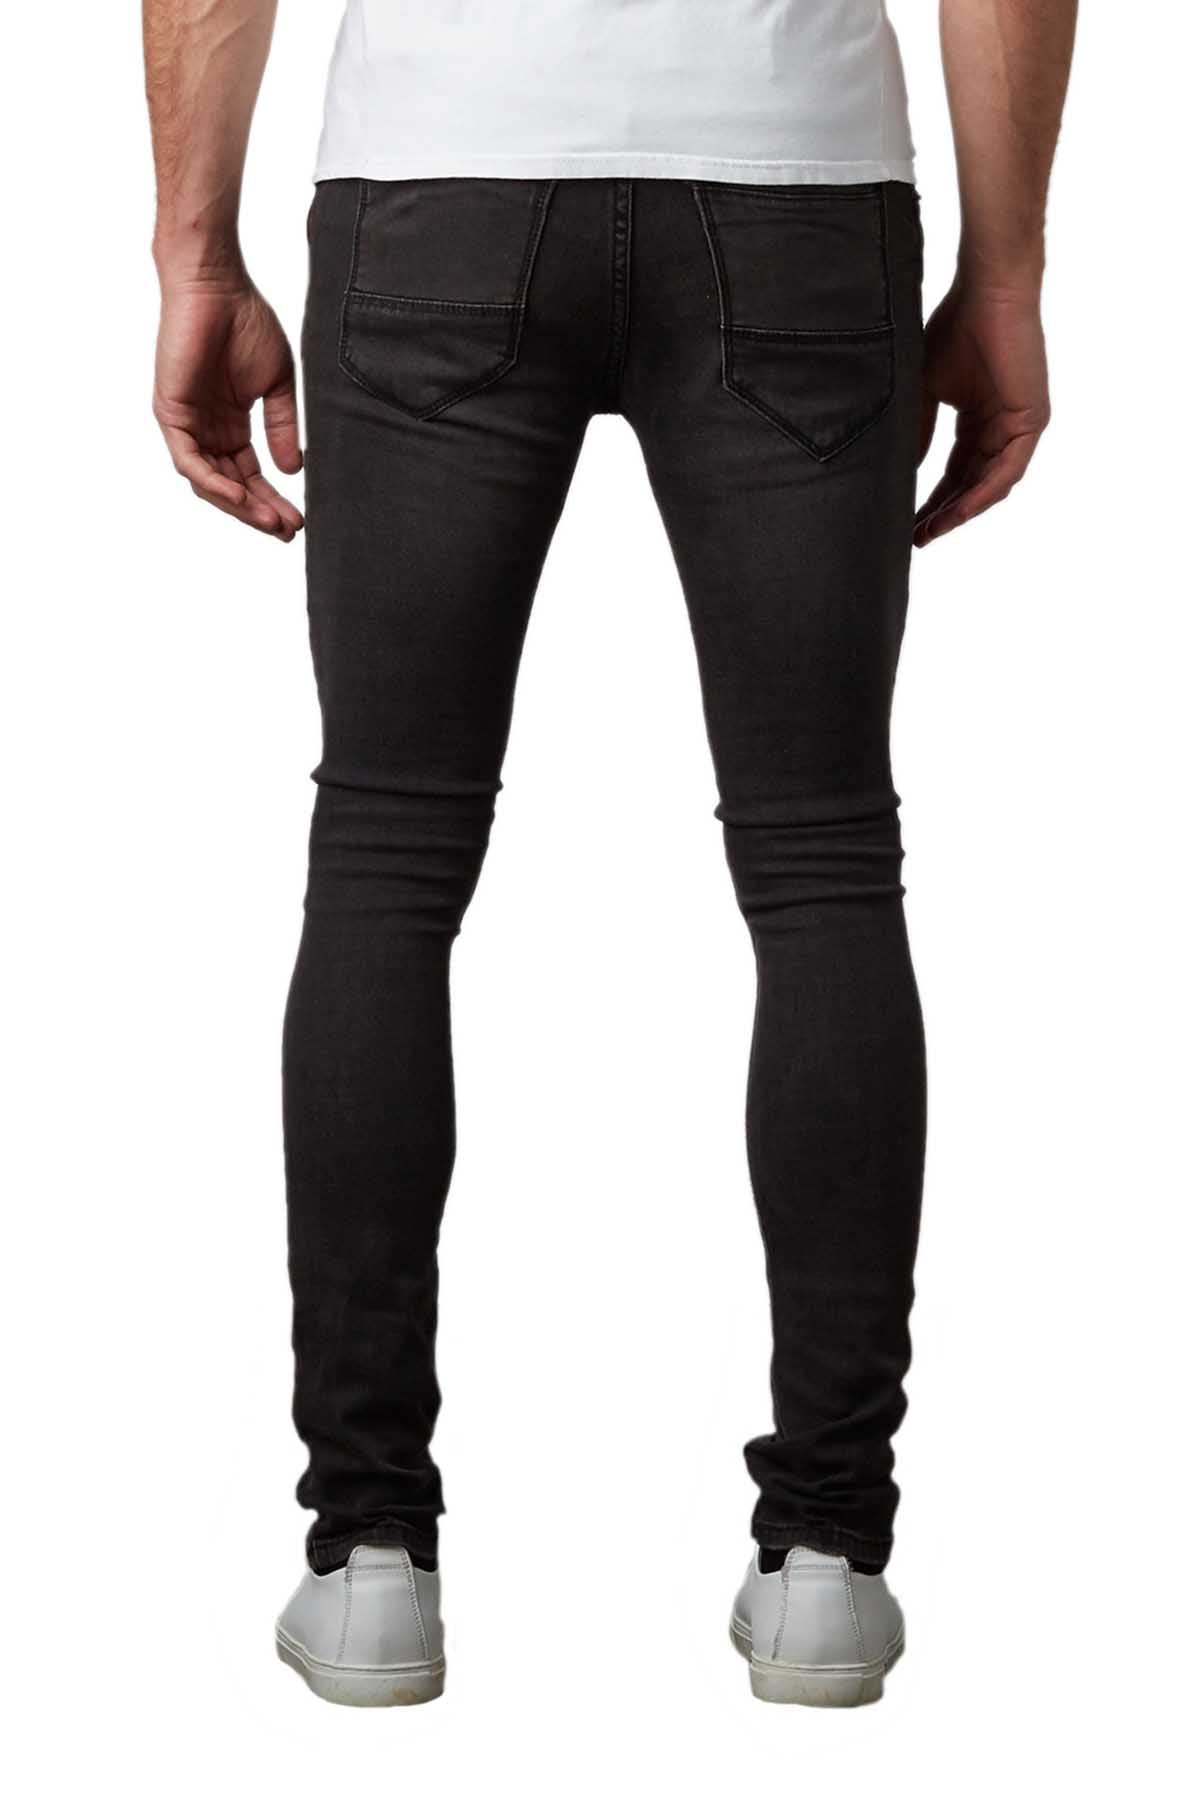 Tailored Recreation Premium Black Distressed Tapered Denim Pant